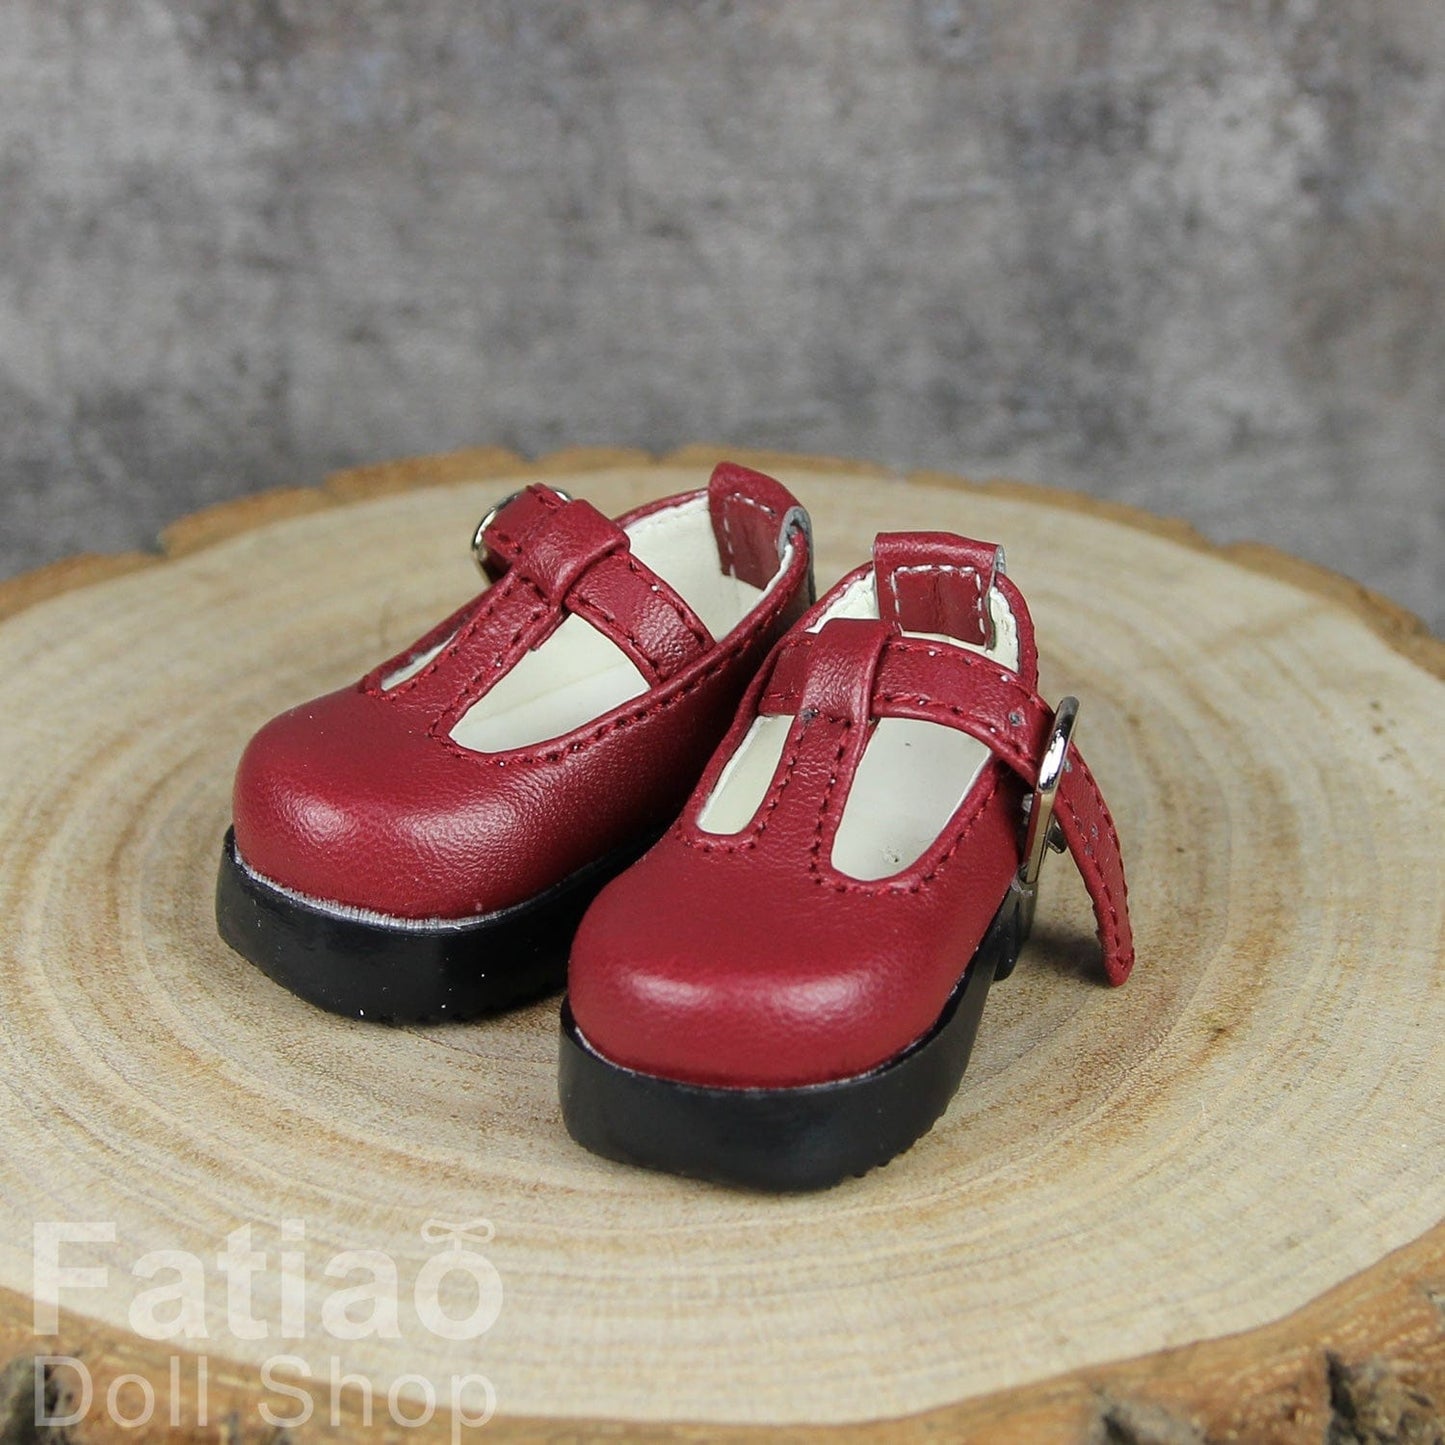 【Fatiao Doll Shop】T字鞋 M35 多色 / BJD 6分 YoSD iMda 3.0